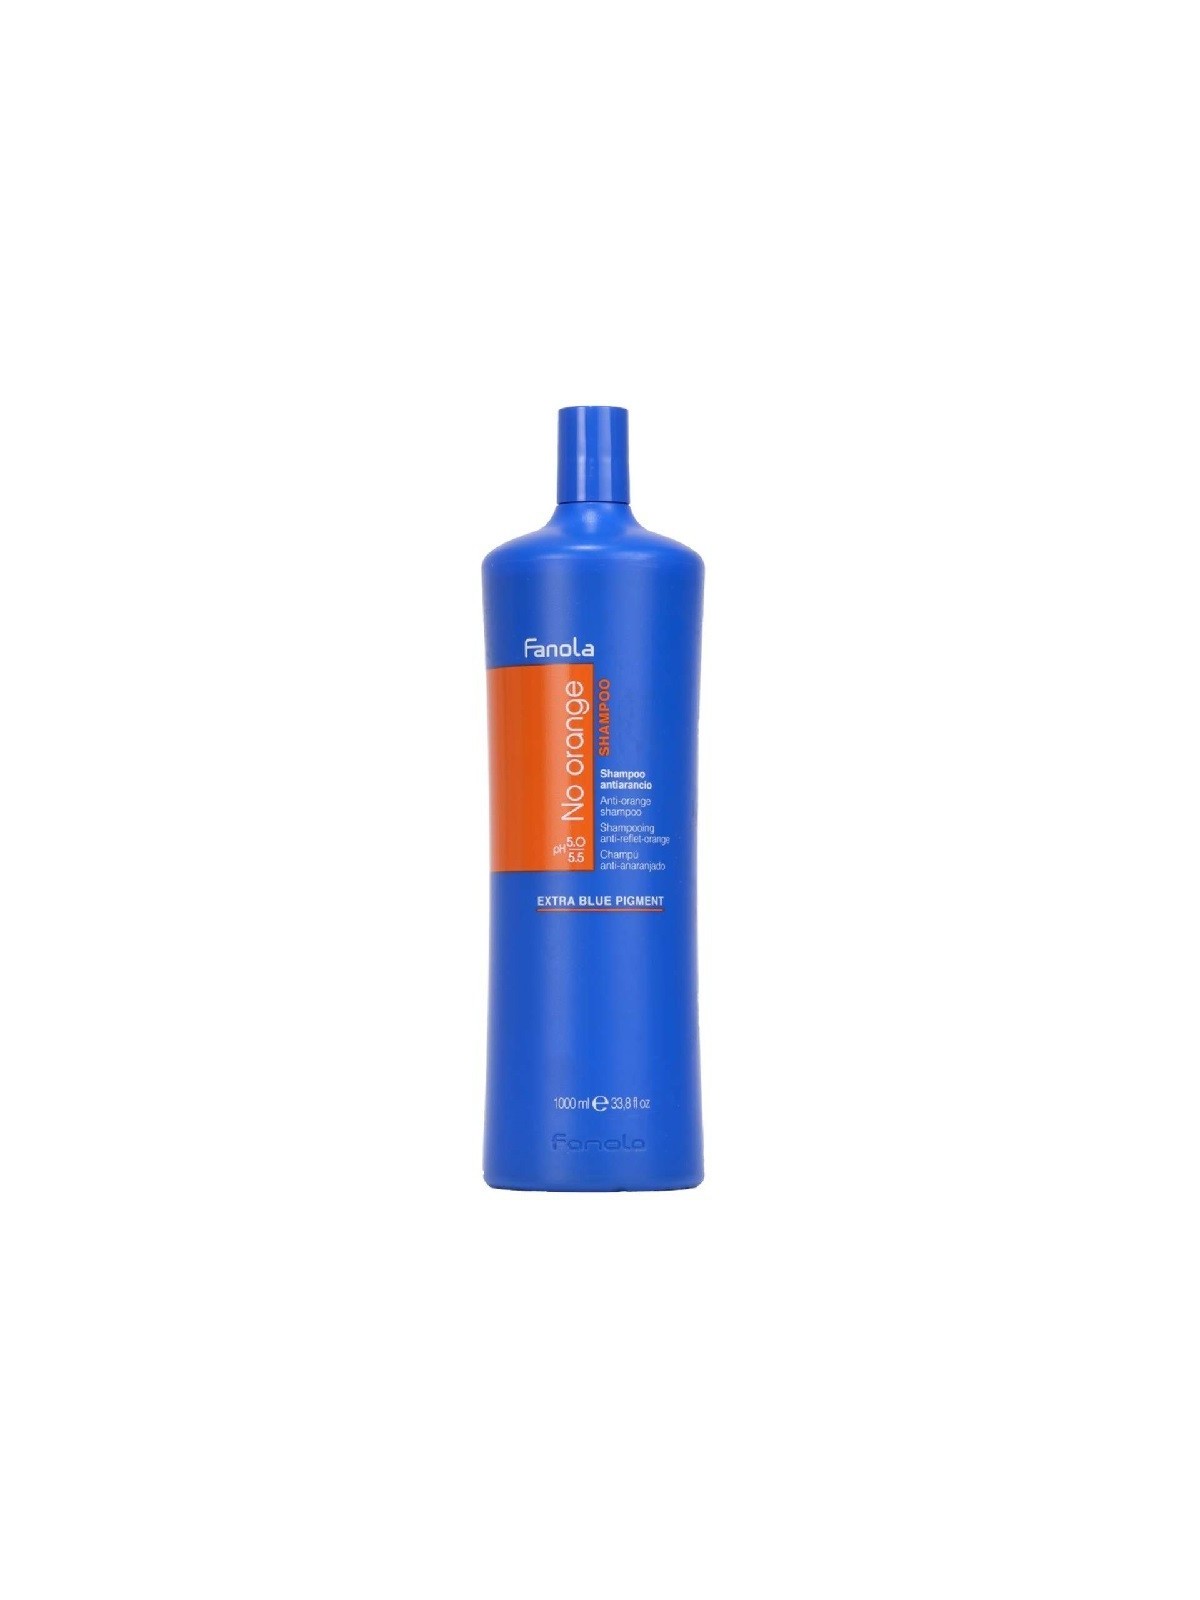 fanola no orange shampoo antiarancio 1000ml